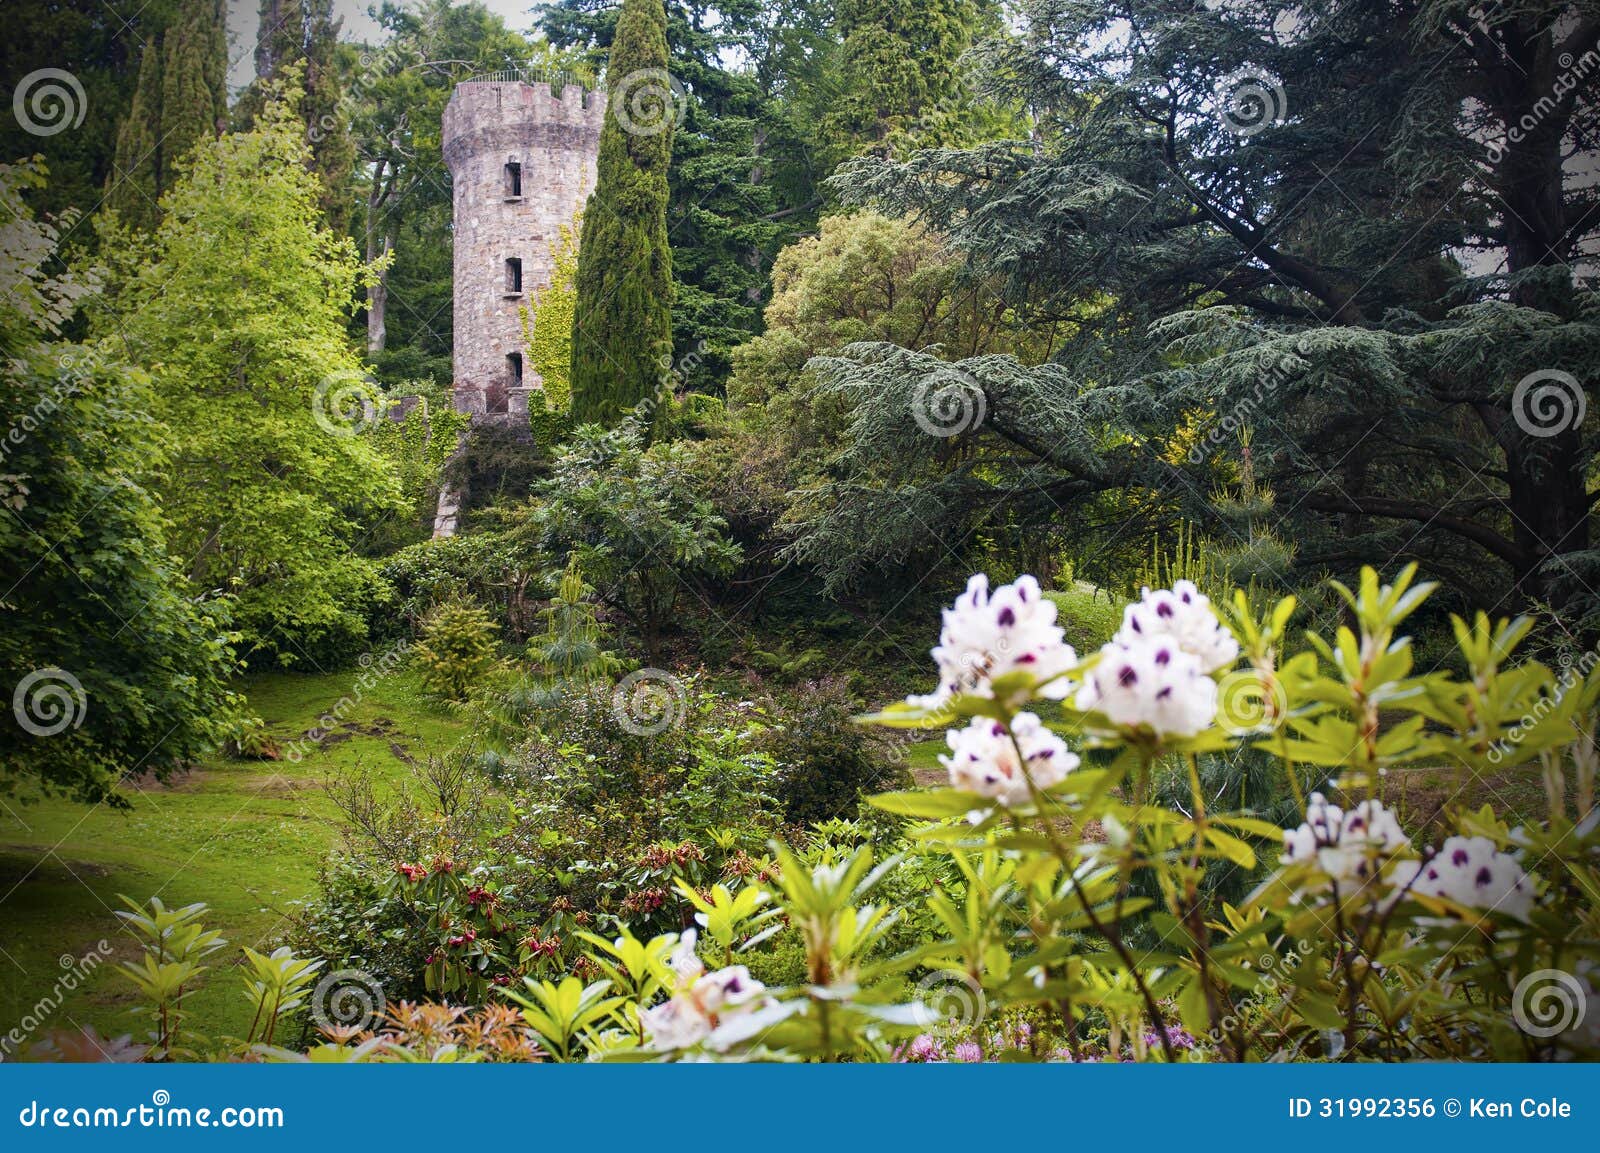 Enchanted Irish Castle And Garden Stock Photo - Image of ...